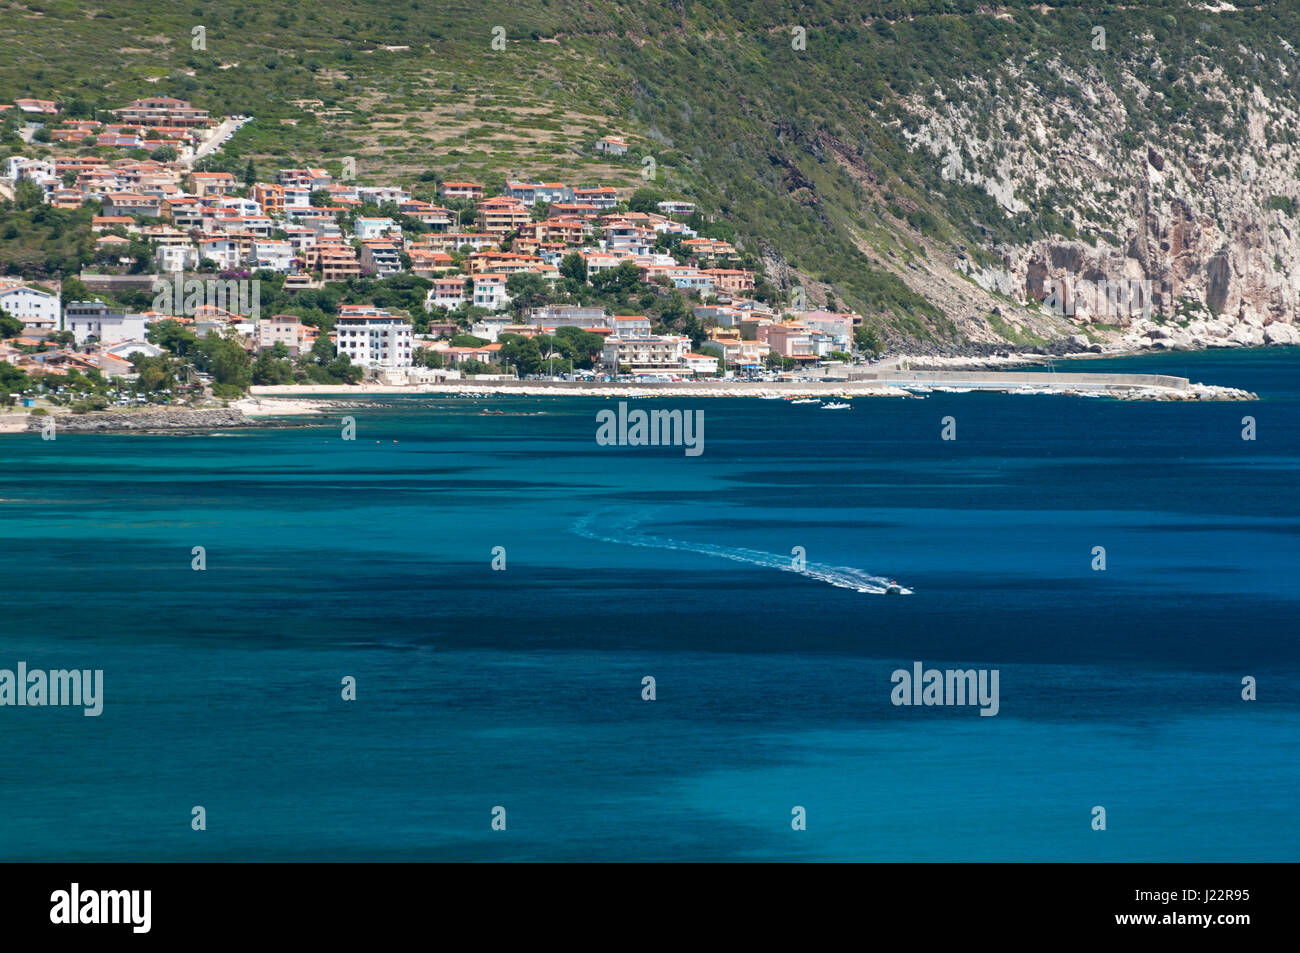 Aerial view of the port and coast of Cala Gonone, Sardinia, Italy Stock Photo